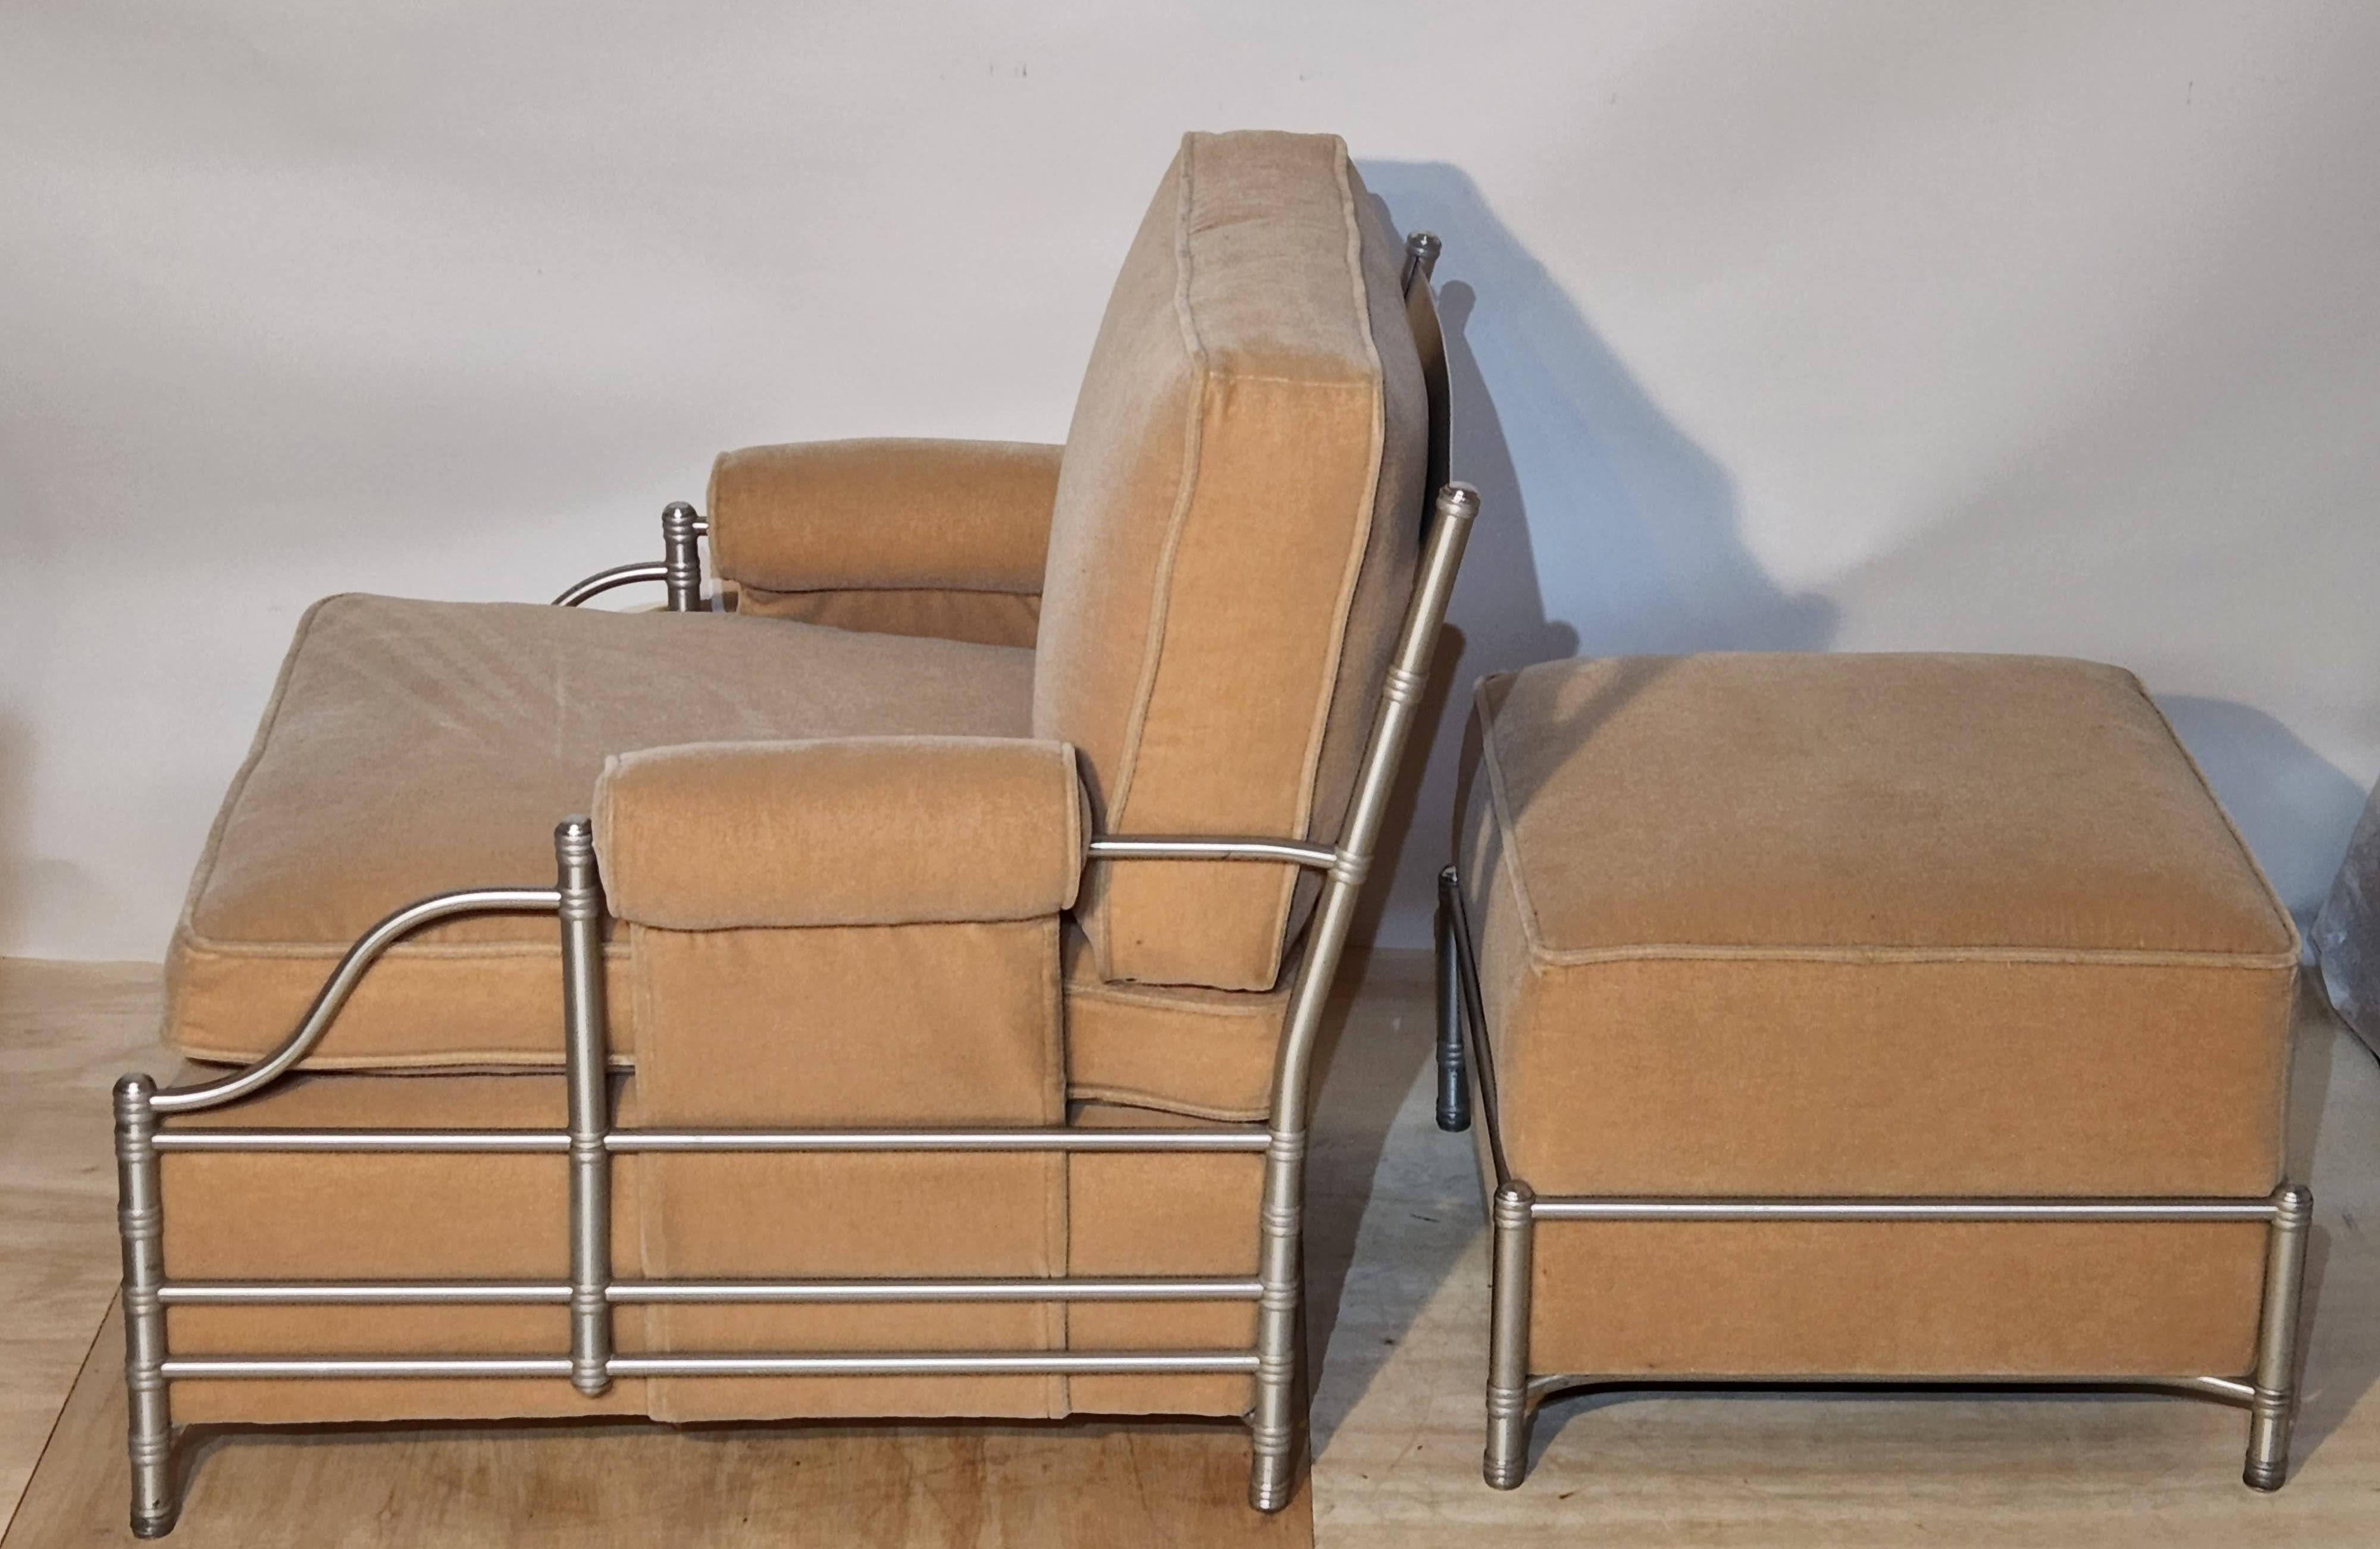 Rare Warren McArthur Arizona Biltmore Era Lounge Chair and Ottoman C. 1931 For Sale 2